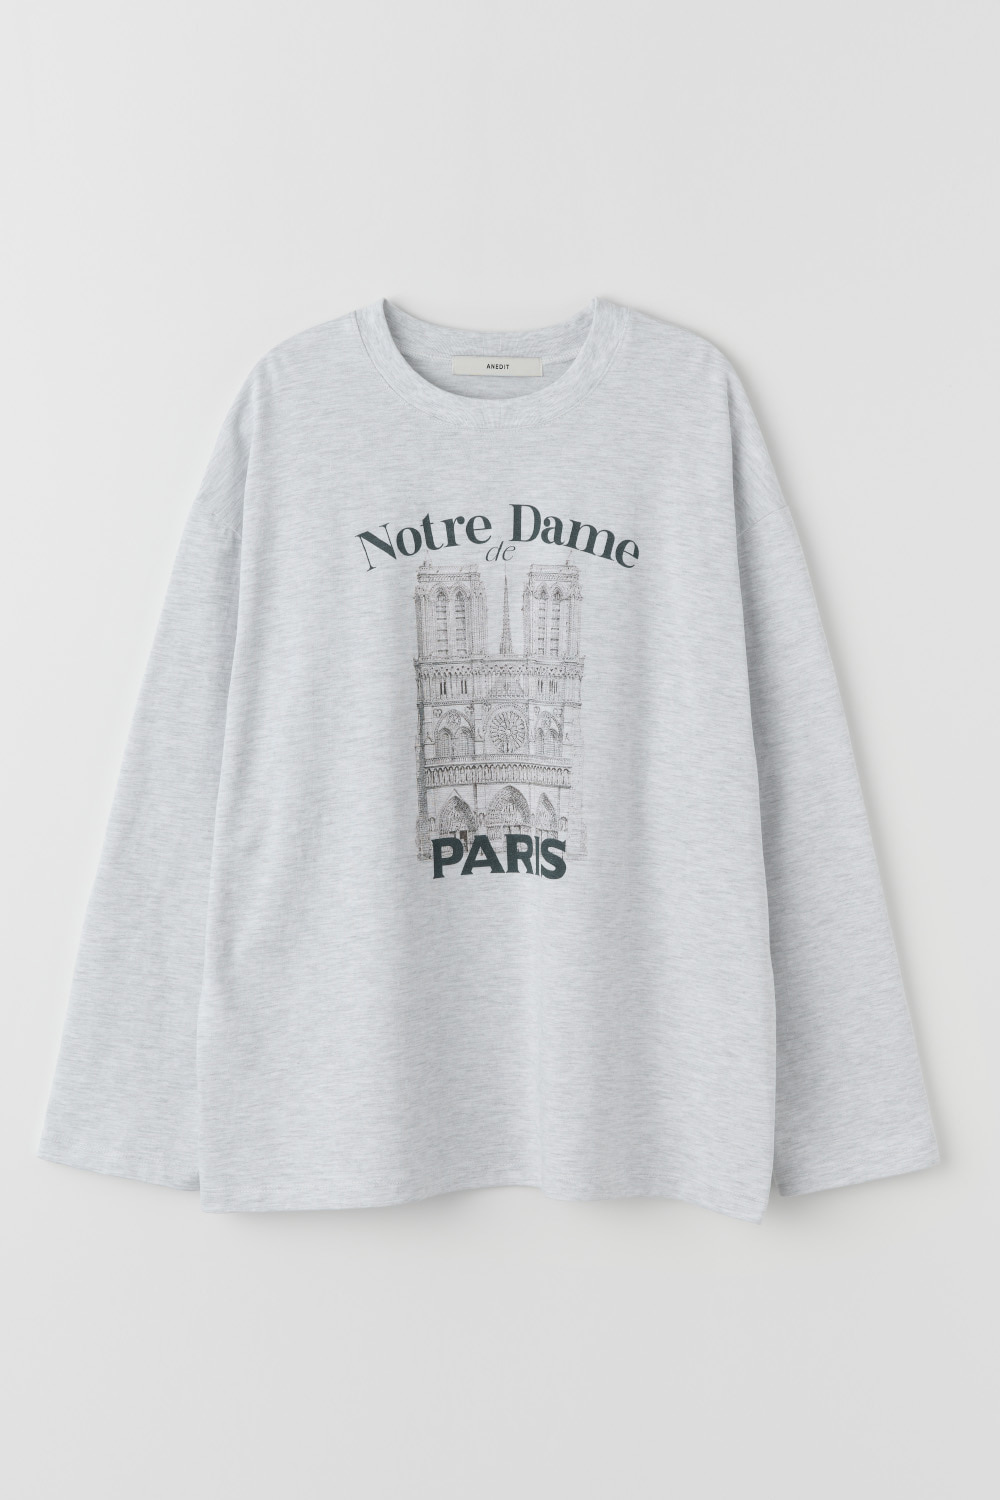 Notre Dame Long Sleeve Tshirt_White Melange